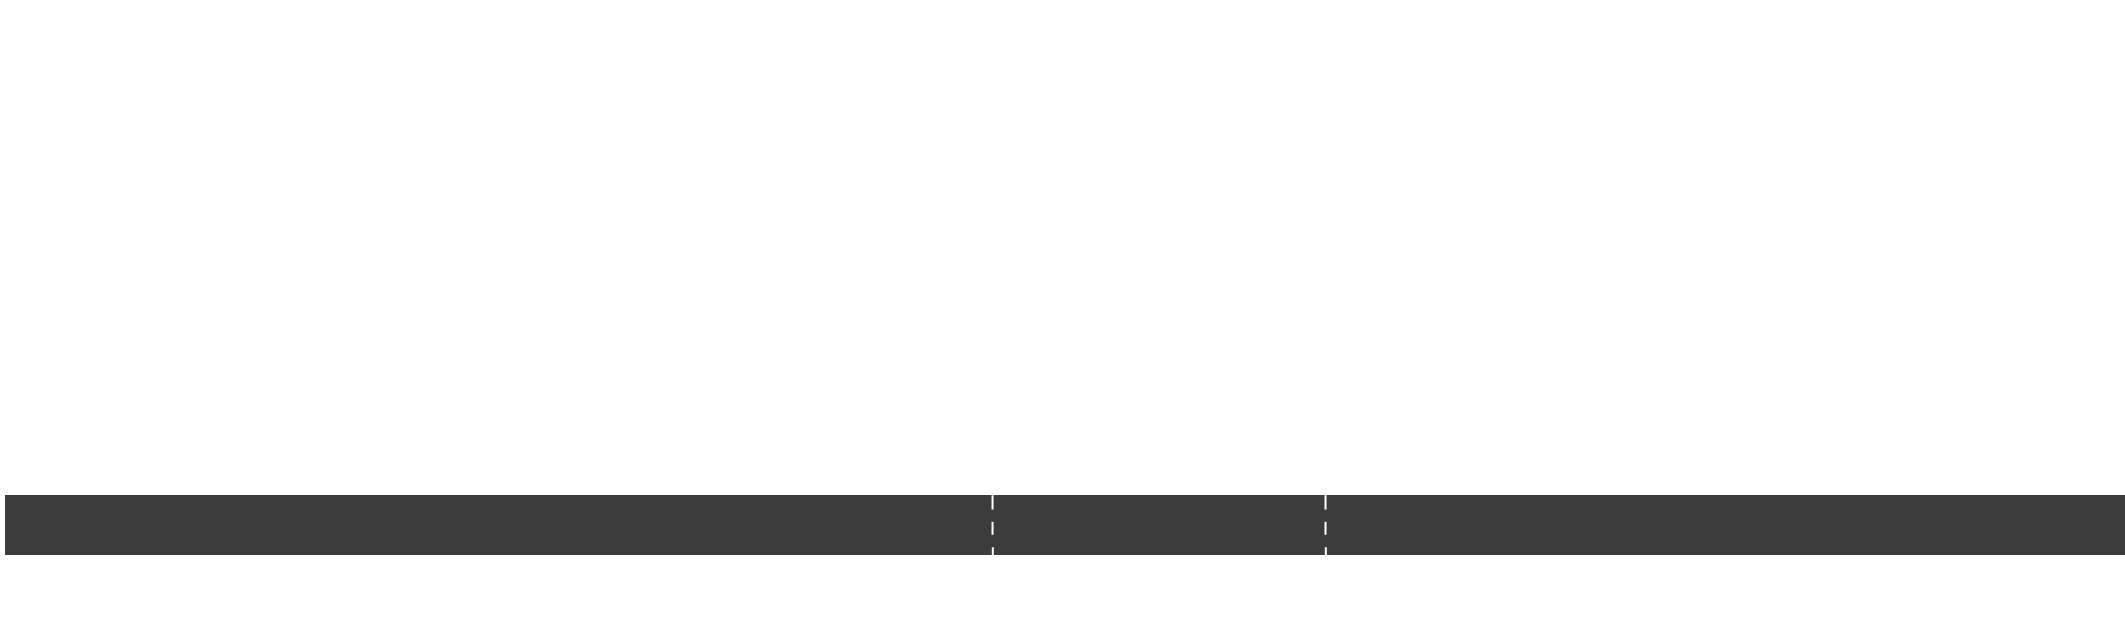 Horizontal Blinds Diagram PNG image